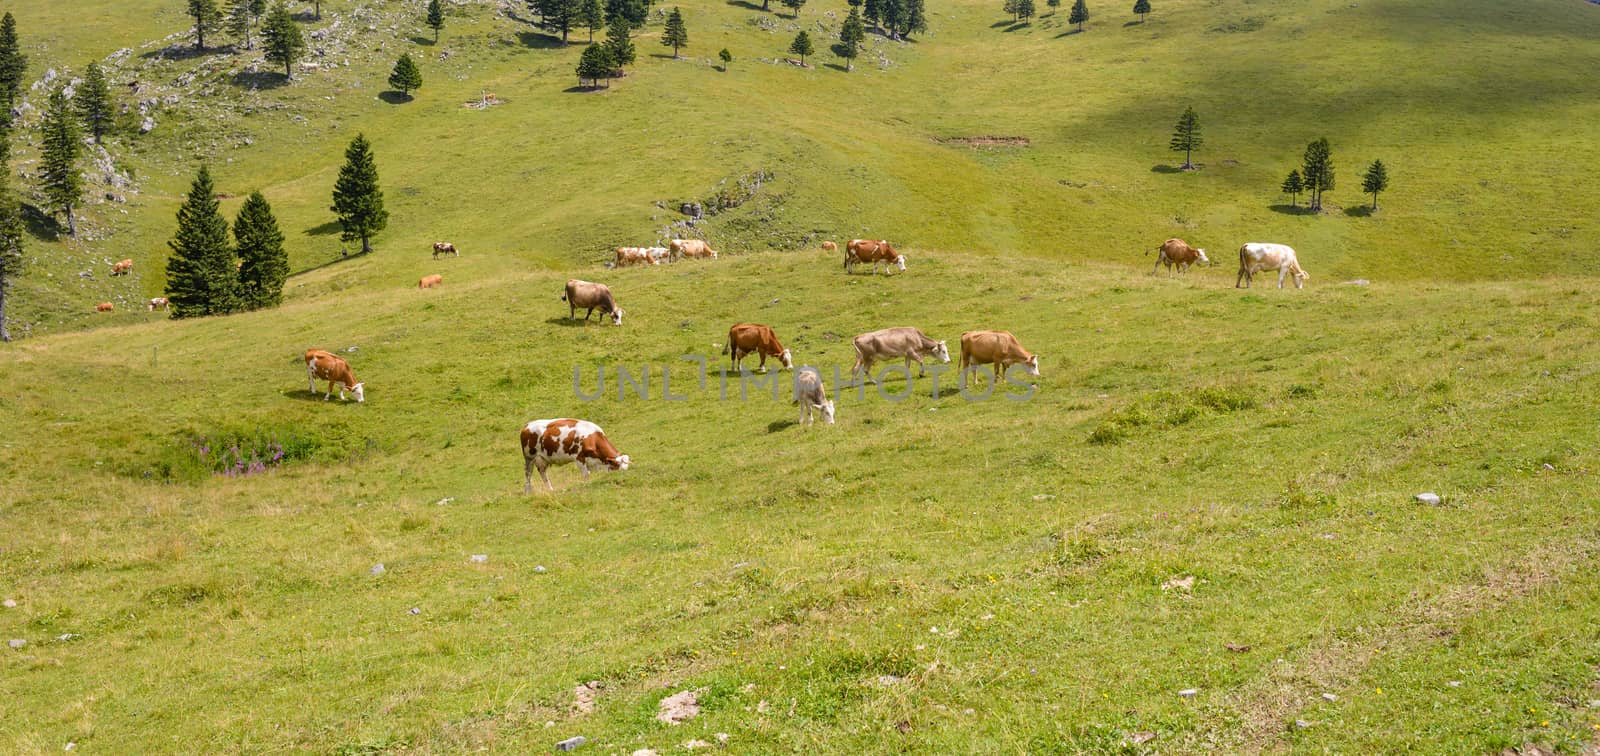 Brown and white Cattle, Livestock grazing on pasture in mountains, European Alps, Velika Planina, Slovenia